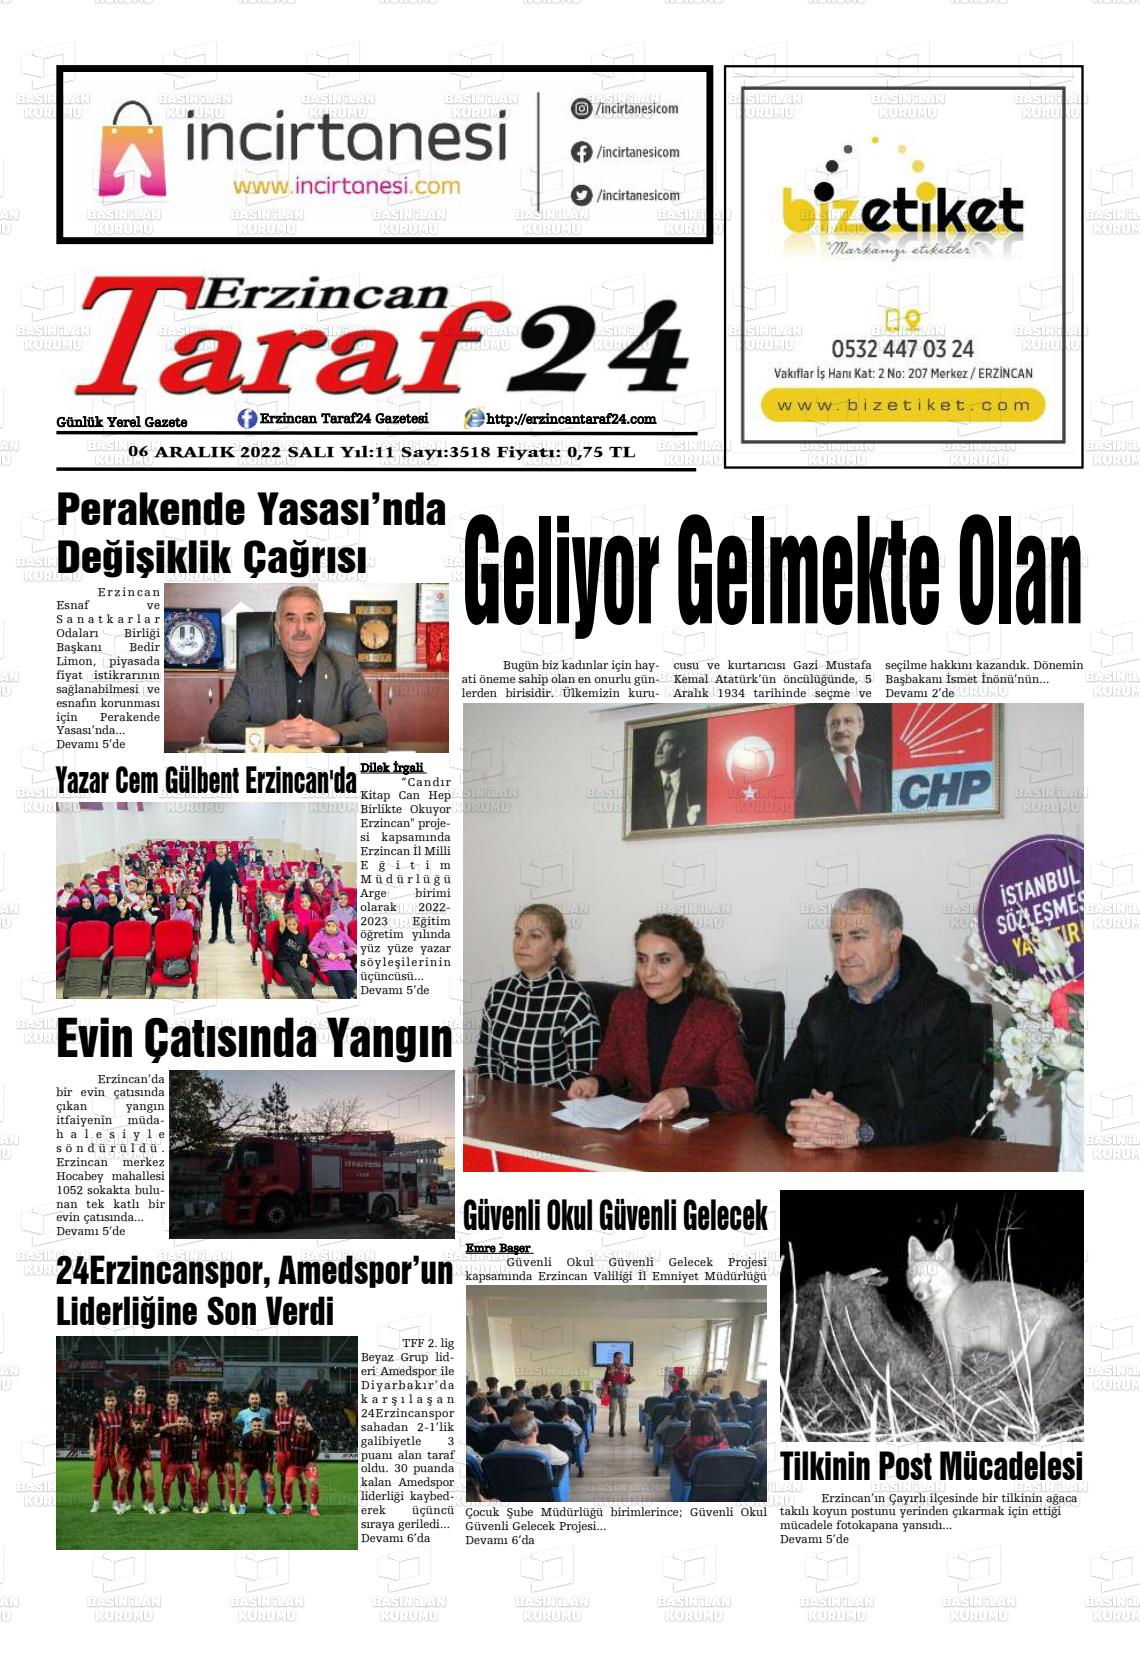 06 Aralık 2022 Erzincan Taraf 24 Gazete Manşeti